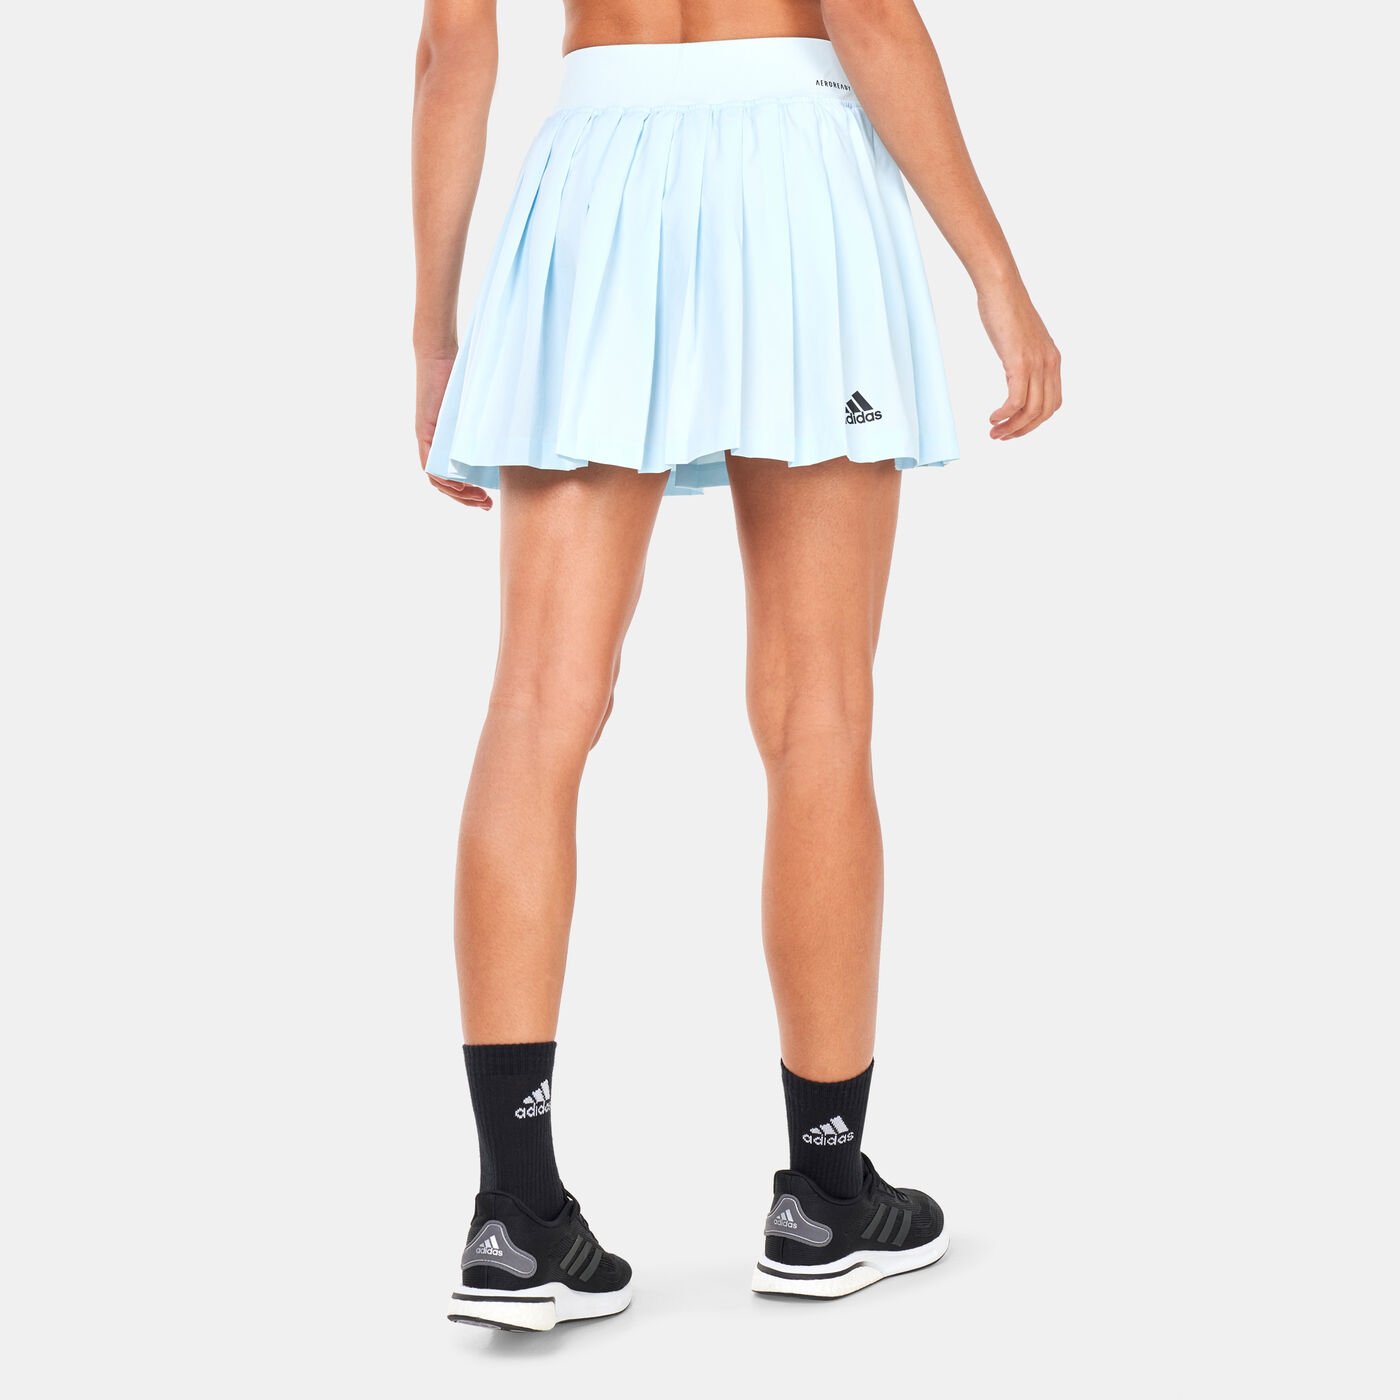 Women's Club Tennis Pleated Skirt